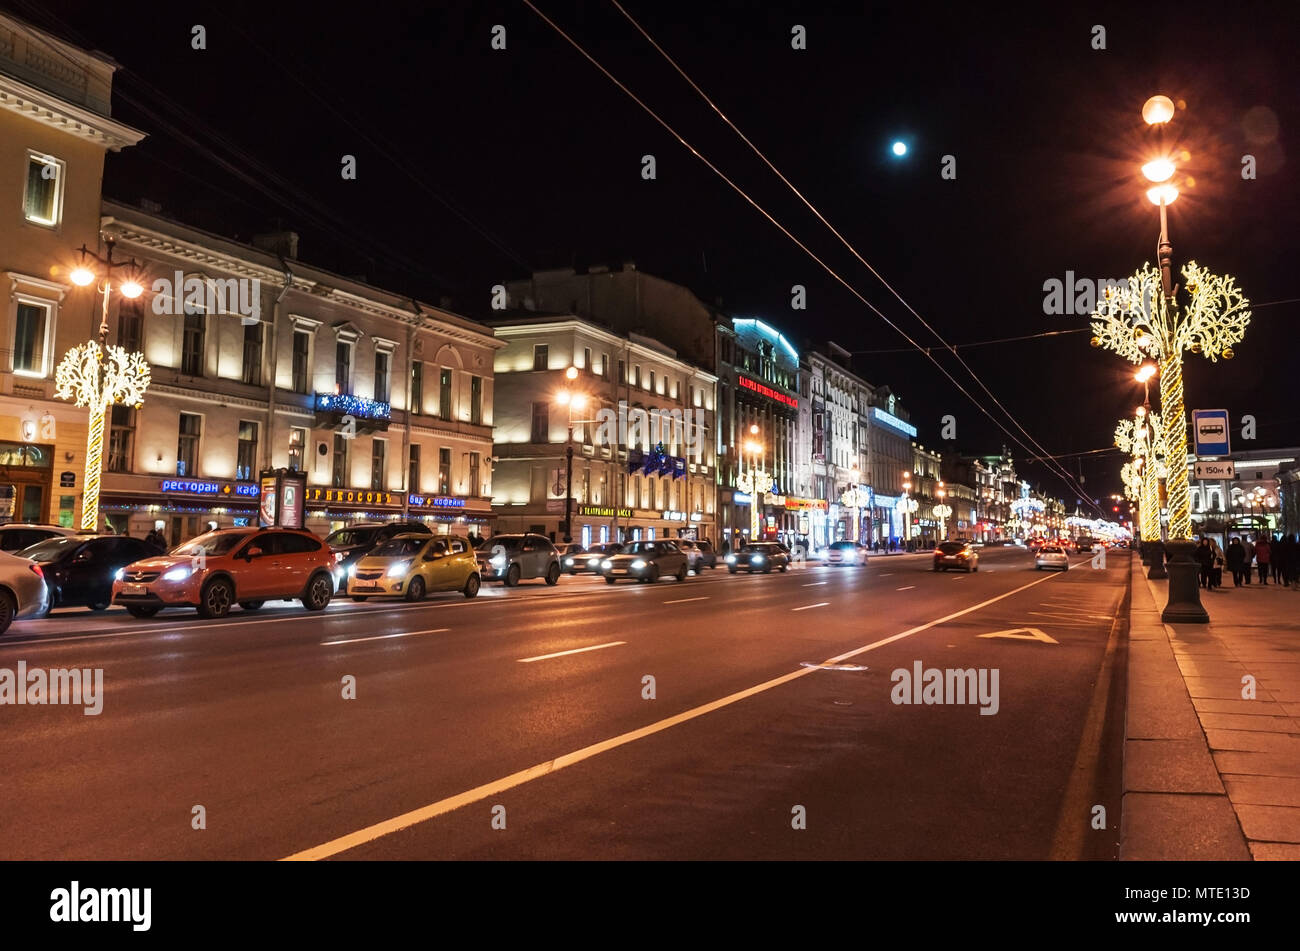 Saint-Petersburg, Russia - December 27, 2015: Nevsky Prospect at night with Christmas illumination, ordinary people walk on the street Stock Photo